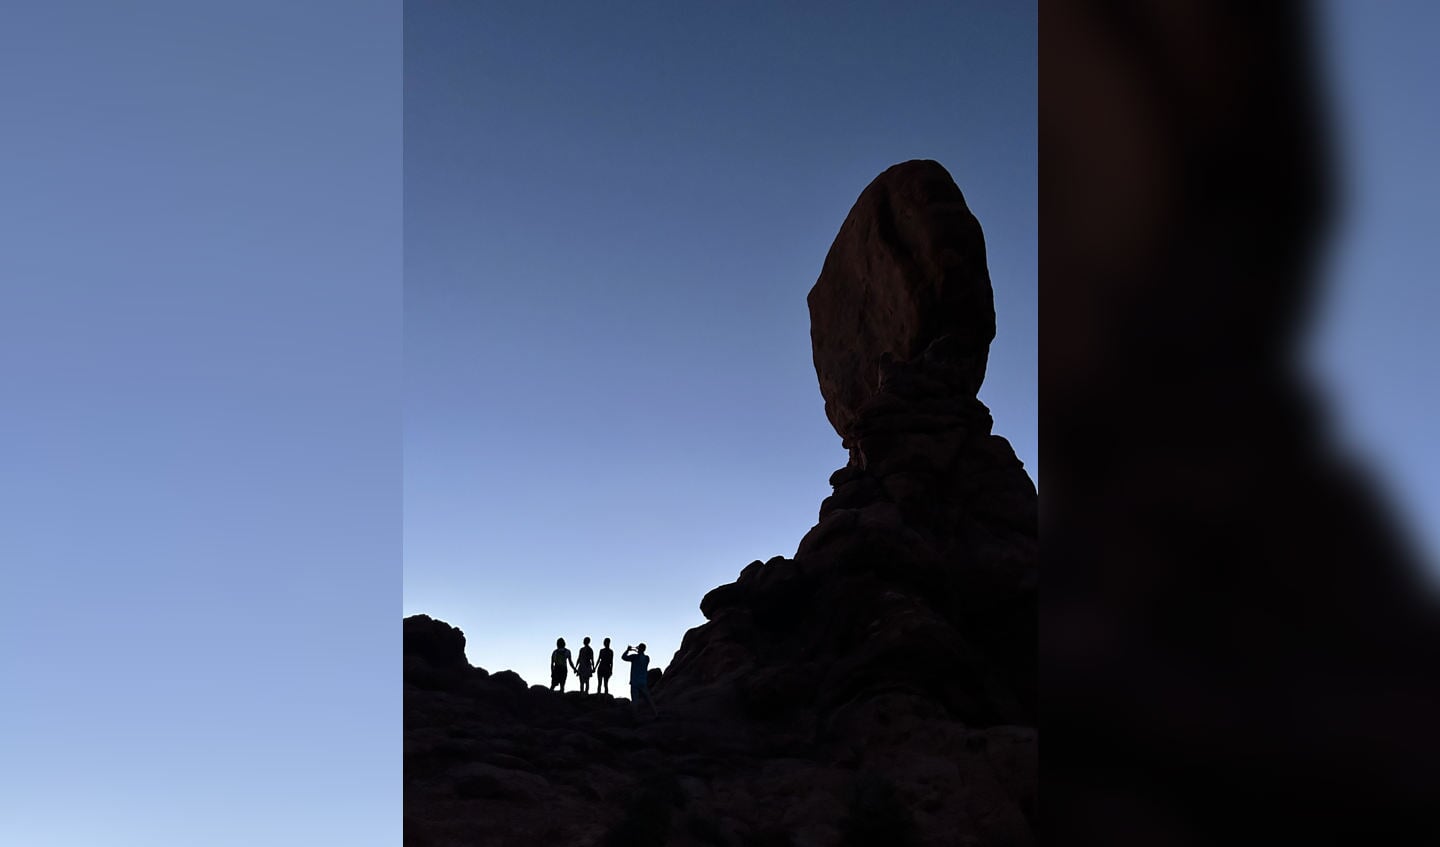 Groepje toeristen die foto maakt met smartphone bij Balancing Rock in Arches National Park - Moab, Utah USA